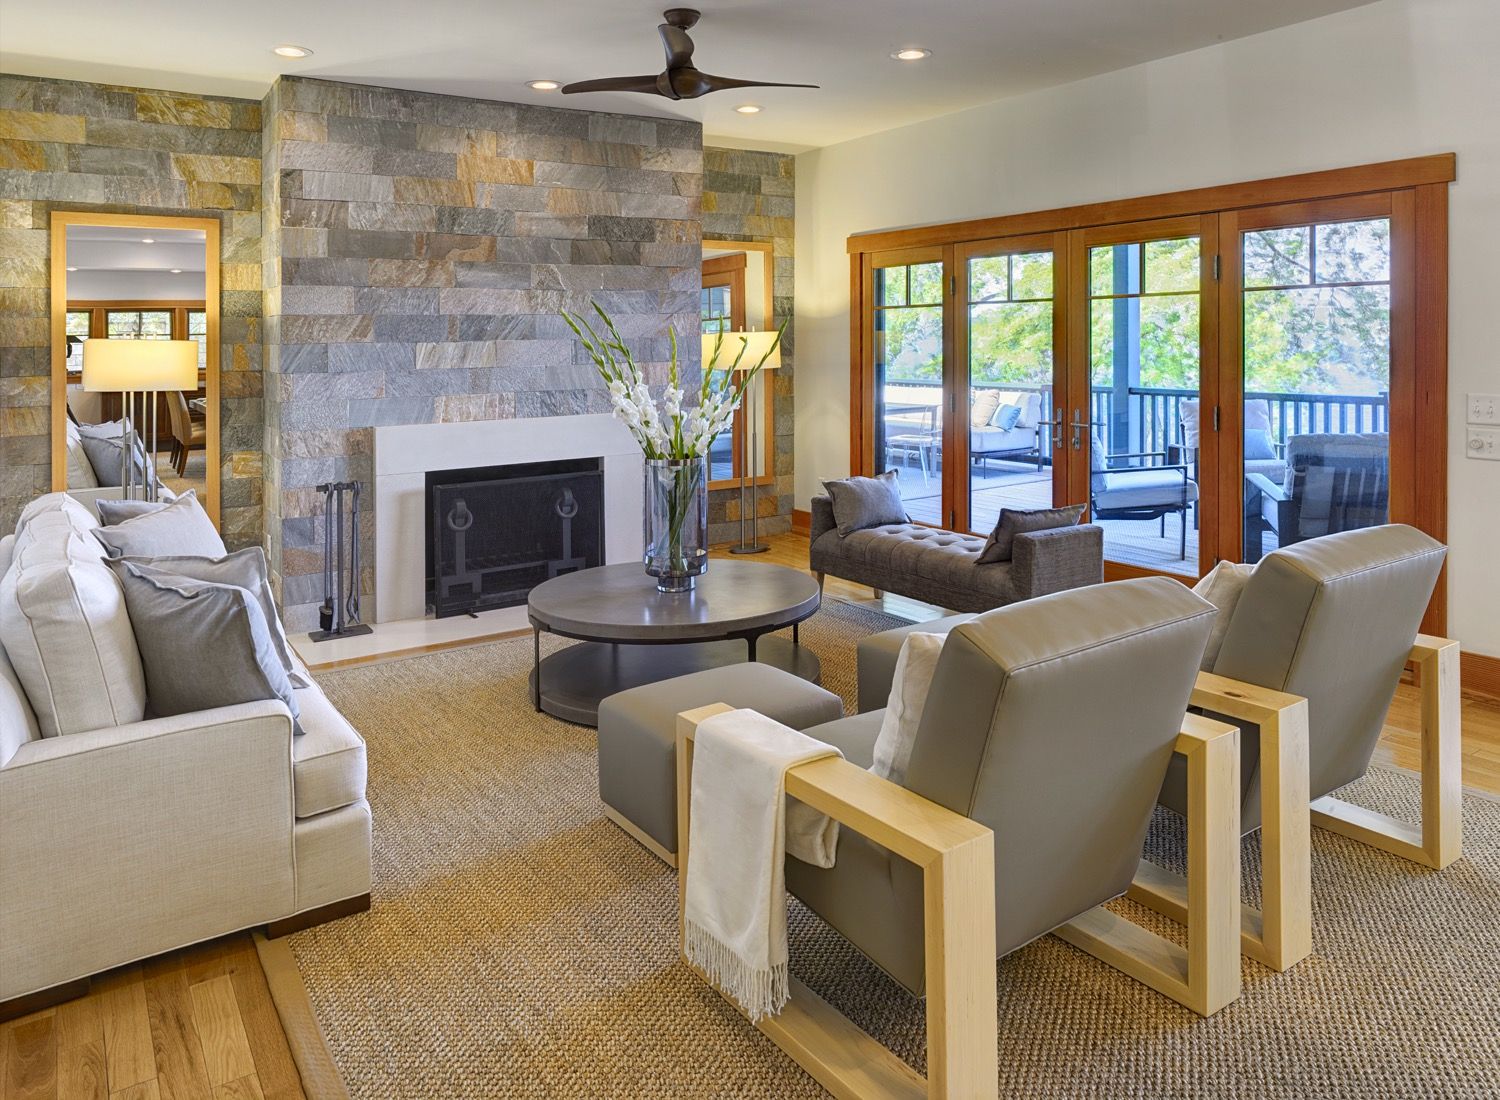 Contemporary Craftsman Living Room In Comfortable Cozy Design (View 12 of 27)